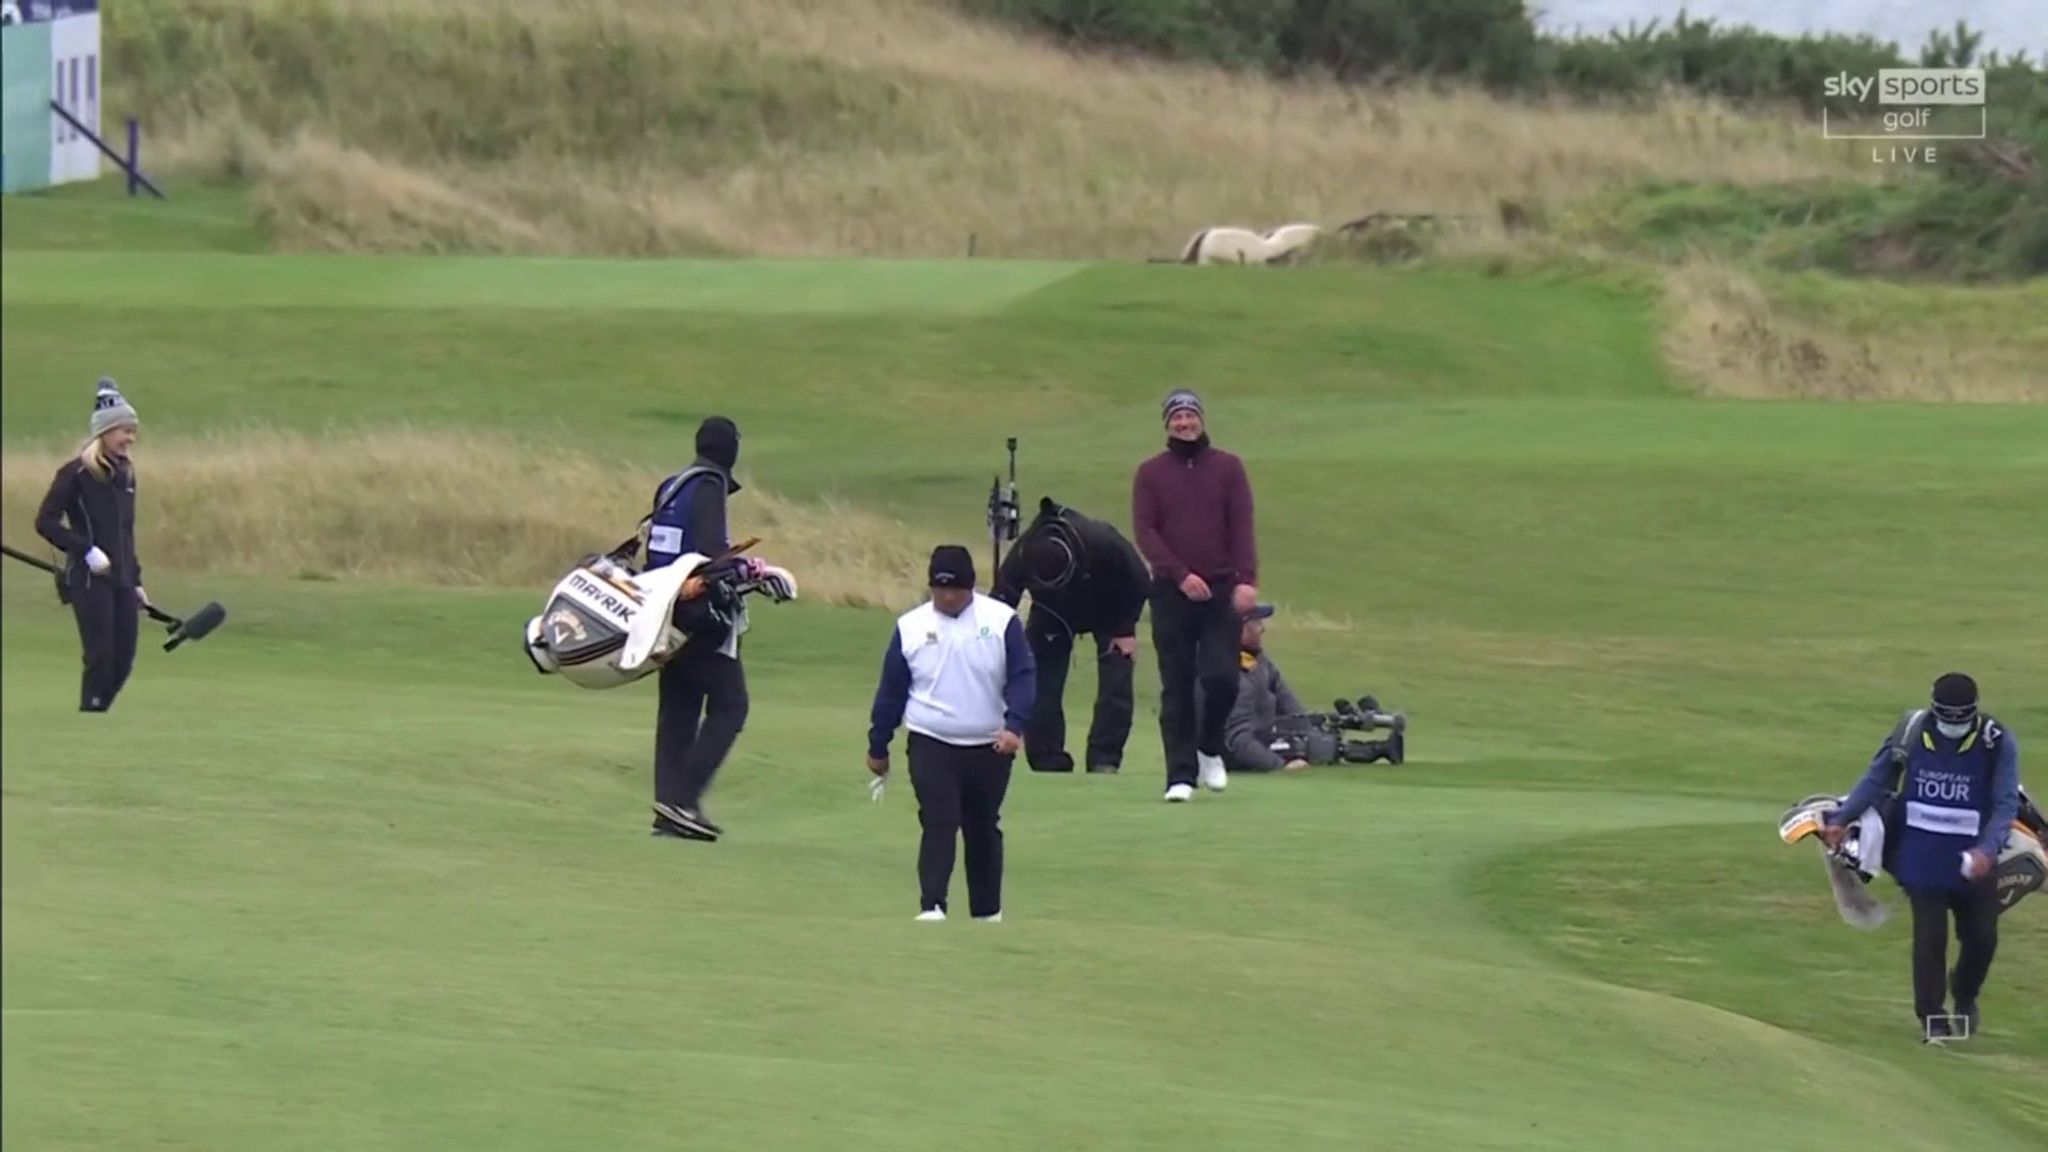 Golf cameraman falls on live TV Video Watch TV Show Sky Sports